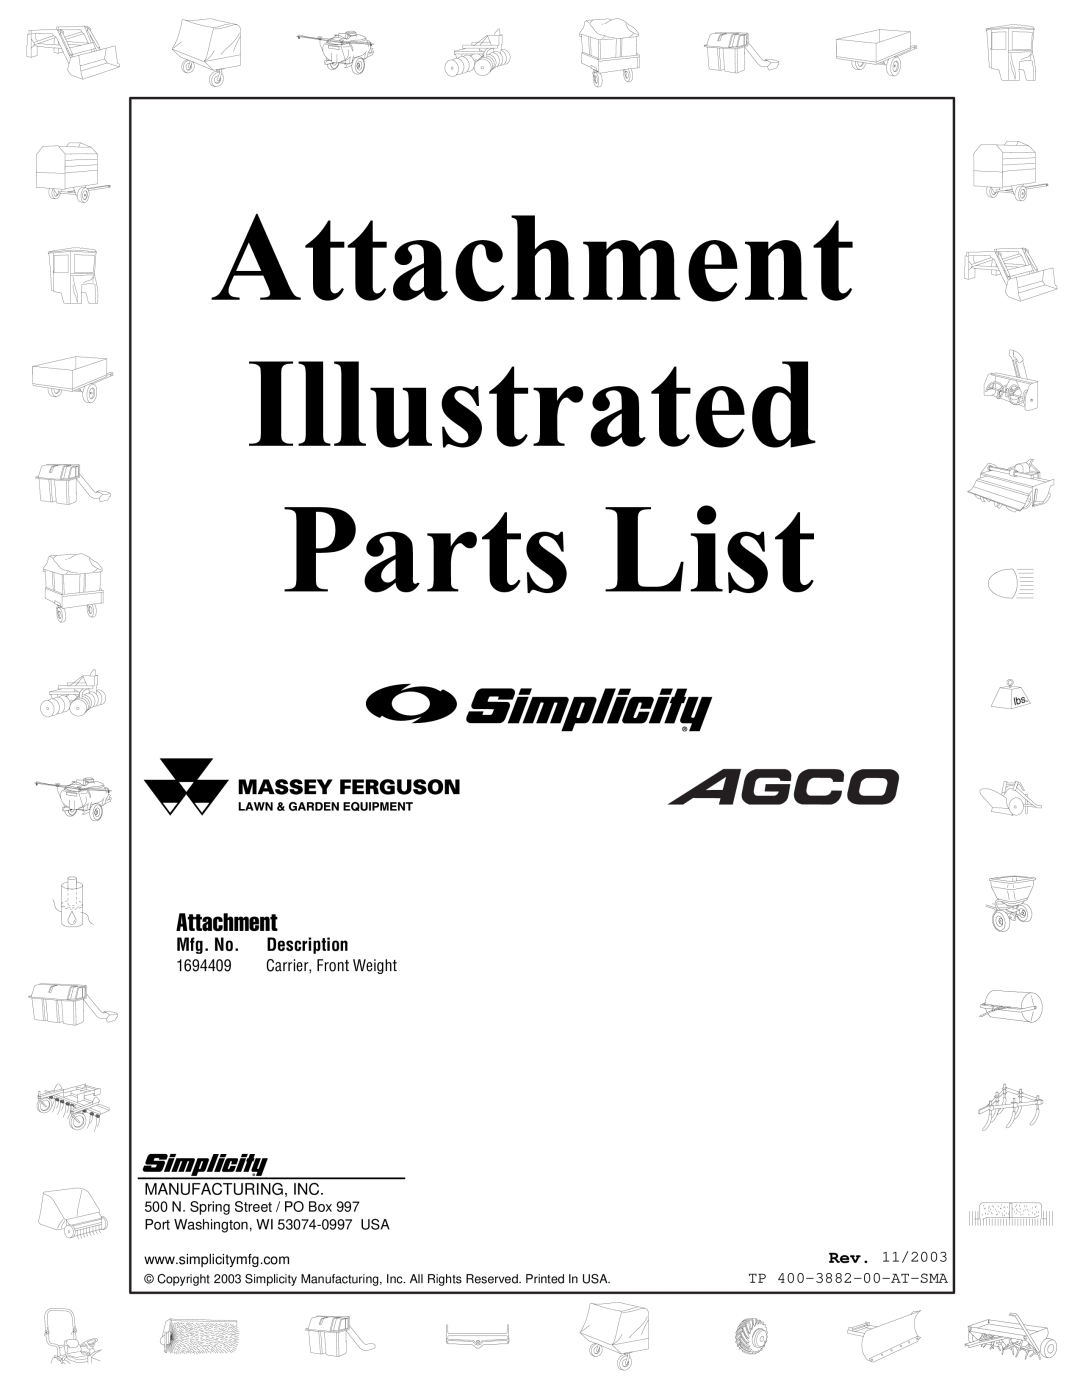 Simplicity 1694409 manual Mfg. No. Description, Rev. 11/2003, TP 400-3882-00-AT-SMA, Attachment Illustrated Parts List 